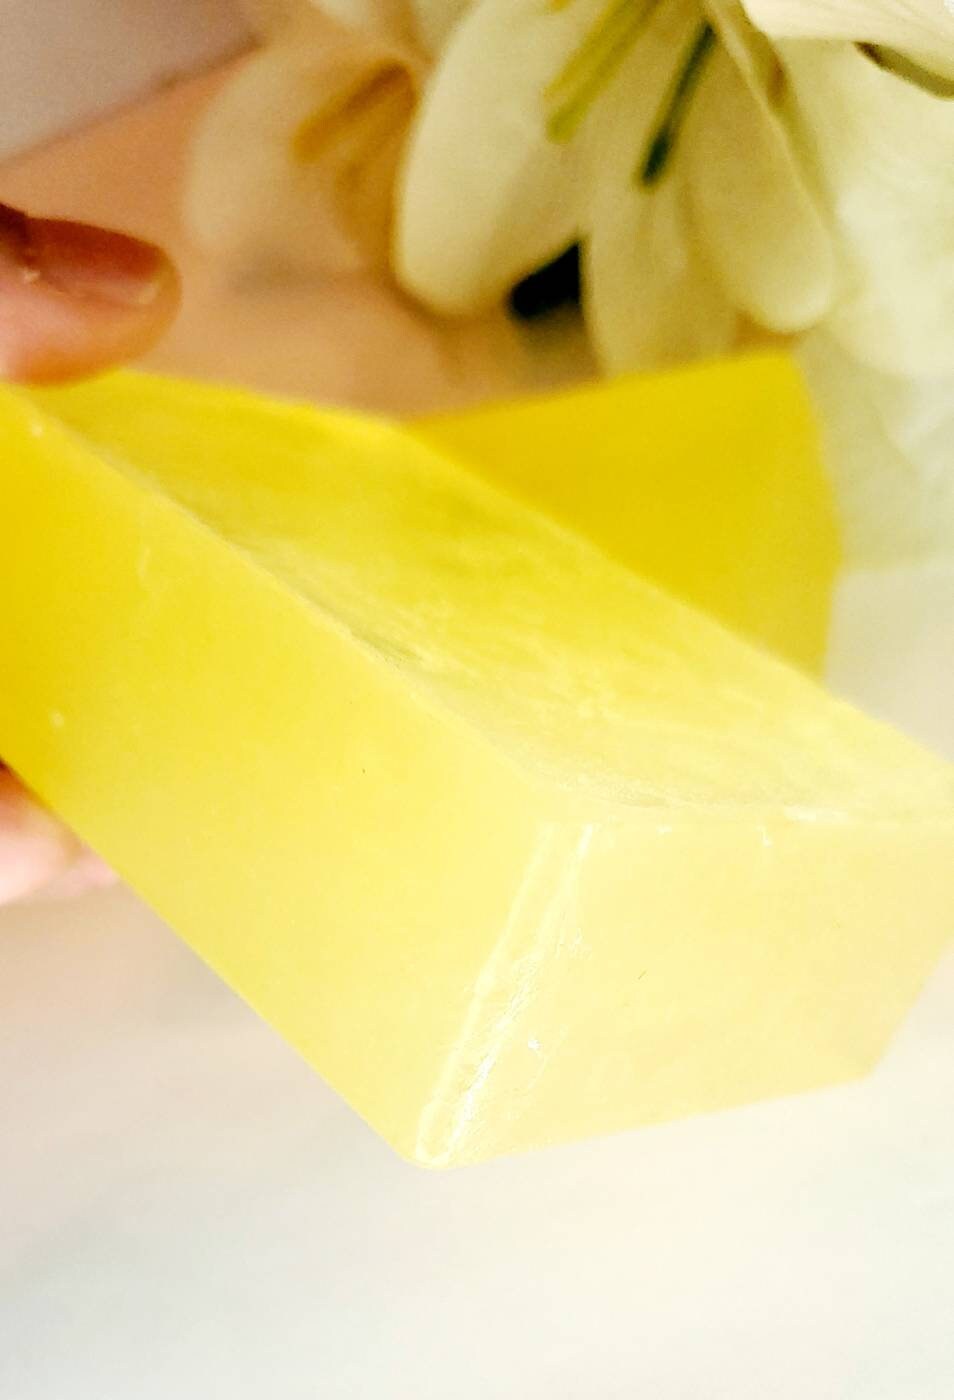 Aloe Vera Soap|Handmade Soap|Shea Butter Soap|Soap|Natural Soap|Natural Skin Care|Self Care|Handmade Soap|Soap|Personal Care